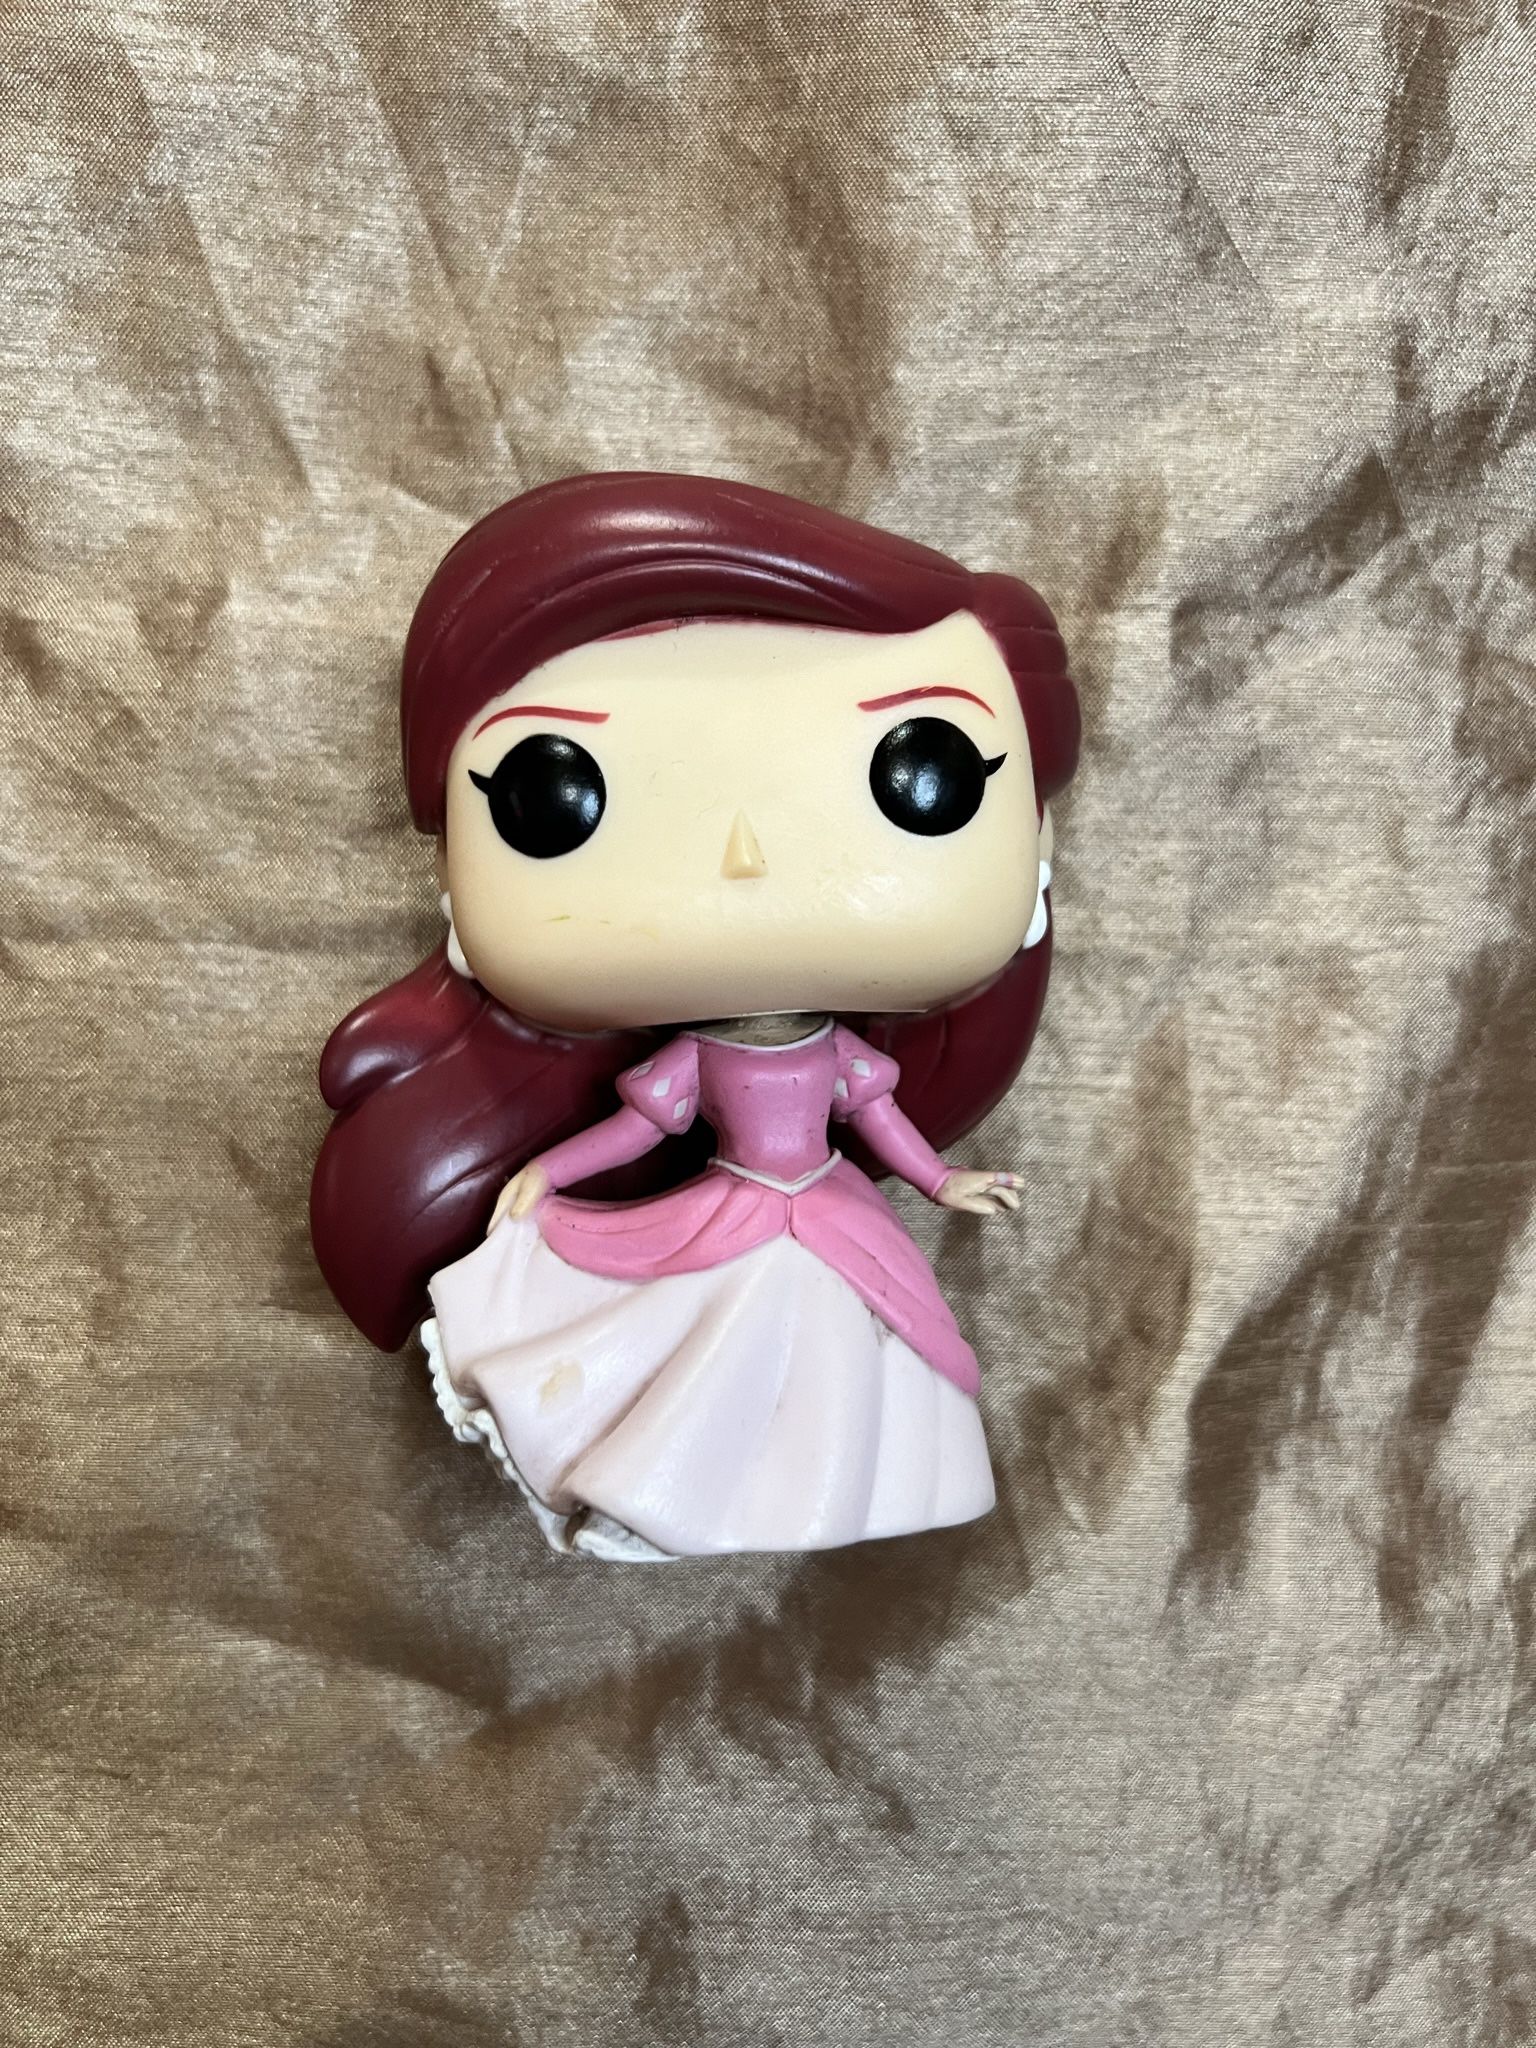 Funko Pop Disney The little Mermaid Ariel Vinyl Figure # 220 pink princess dress